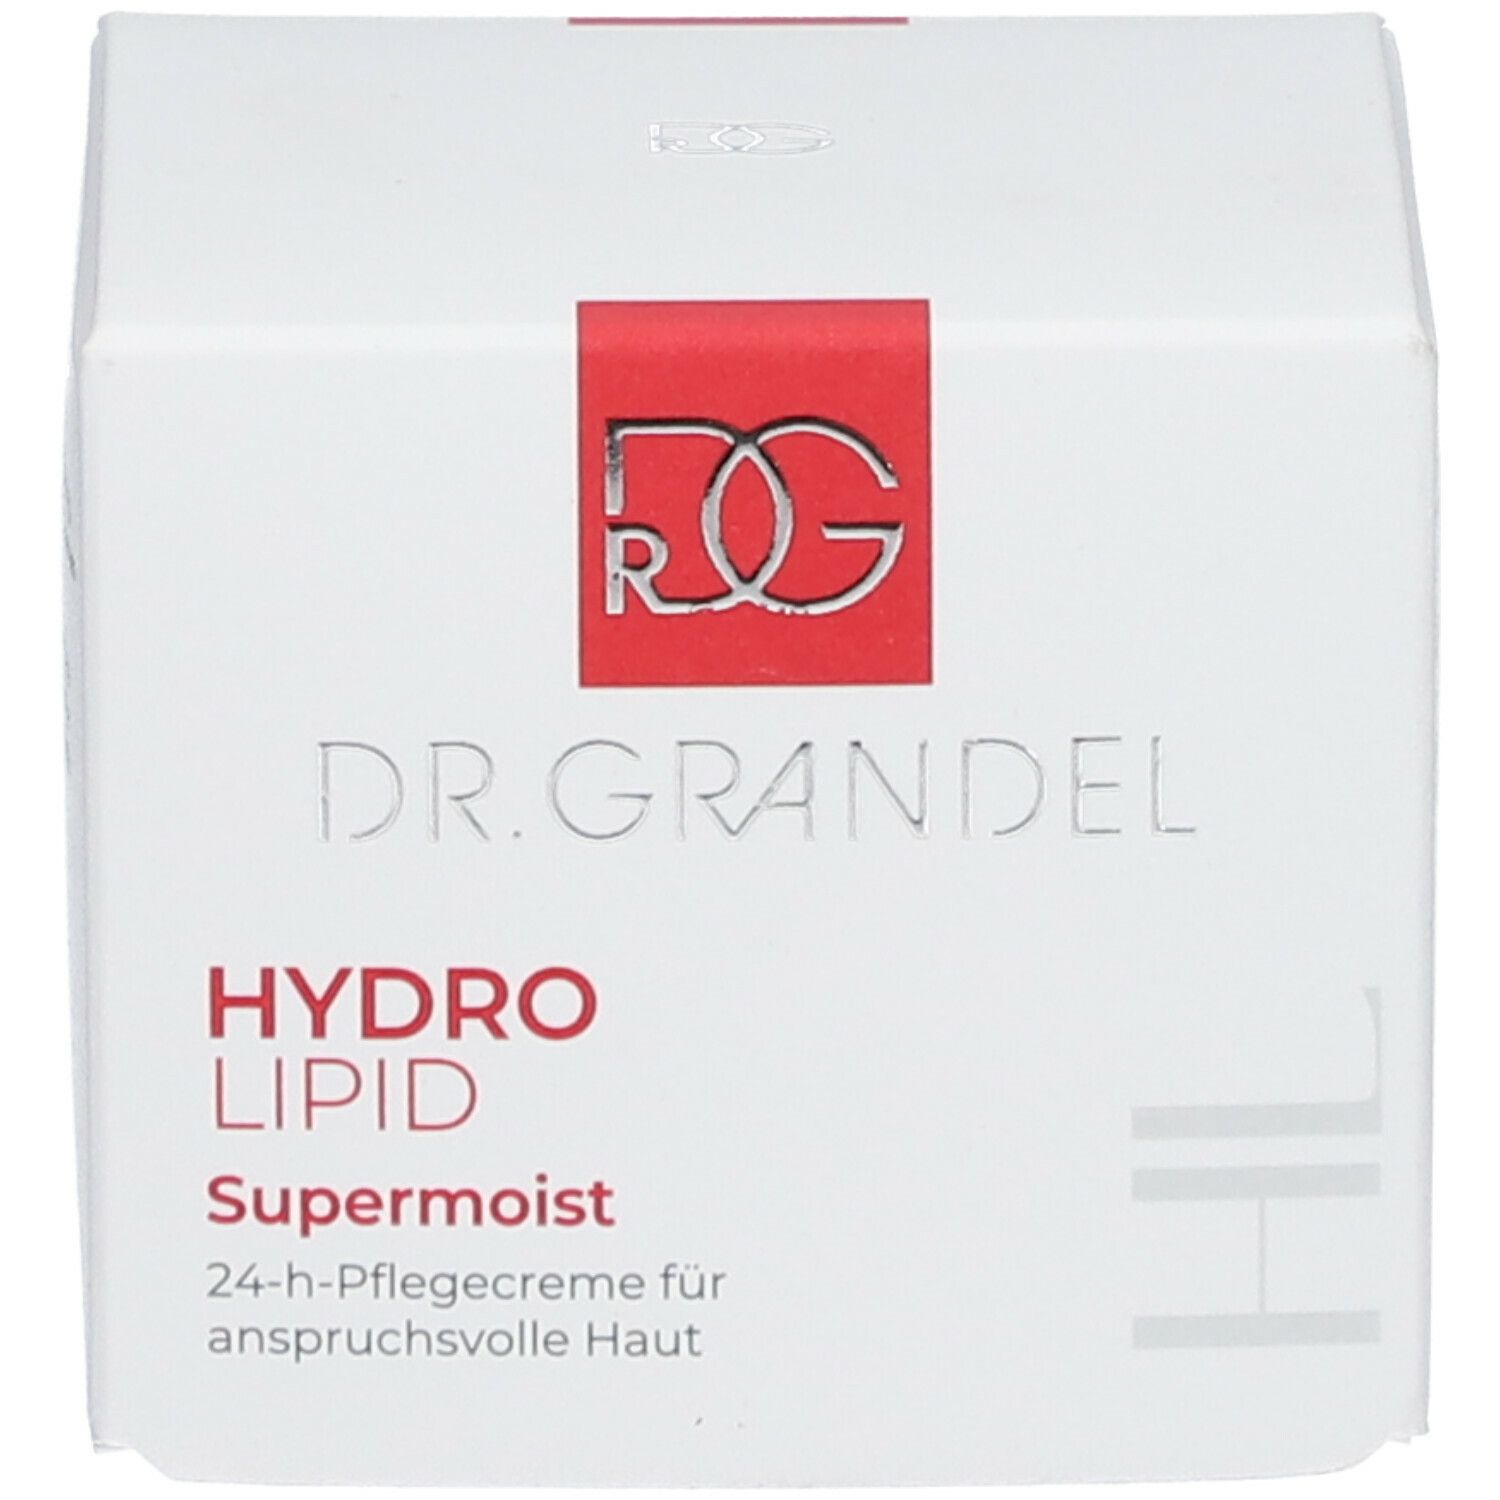 Dr. Grandel Hydro Lipid Supermoist Tagescreme